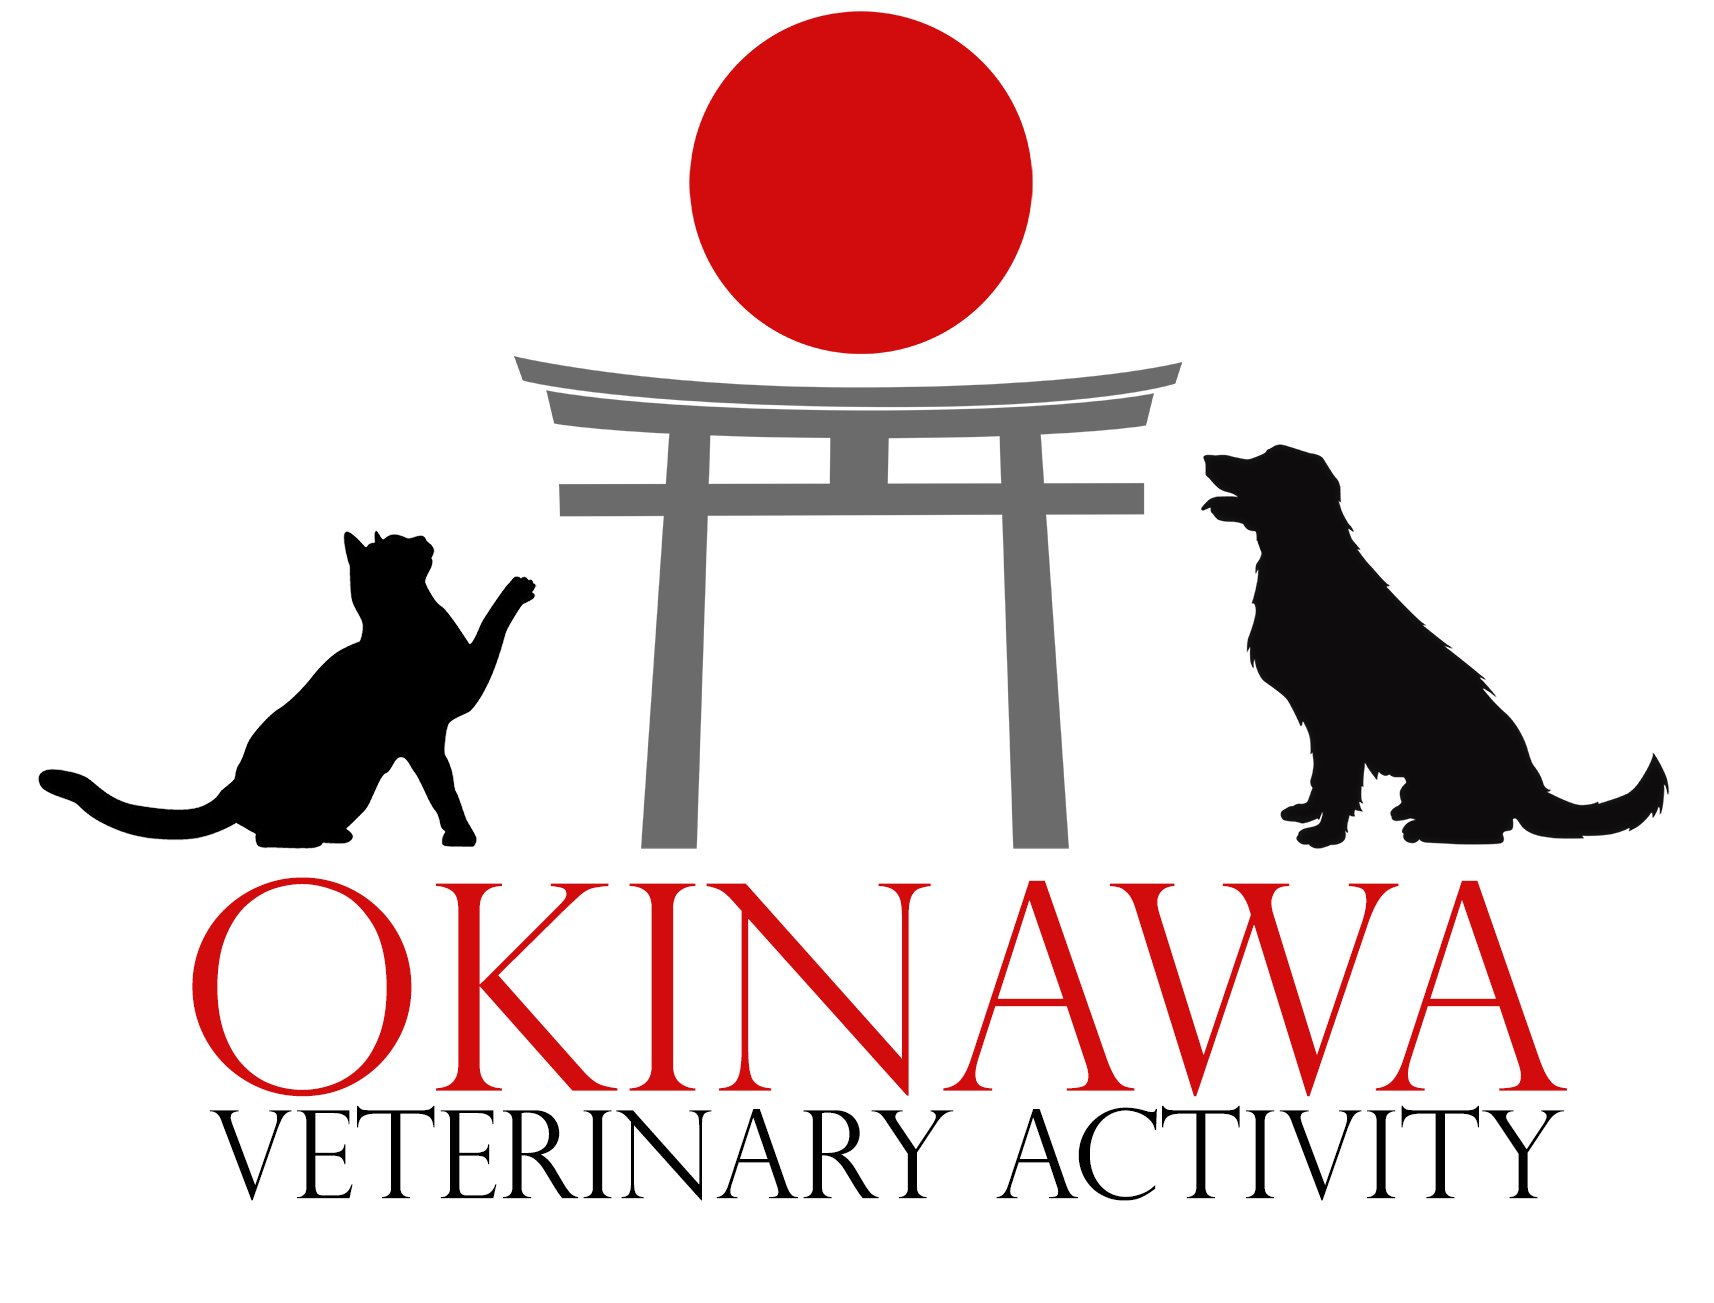 Okinawa Veterinary Activity FaceBook page